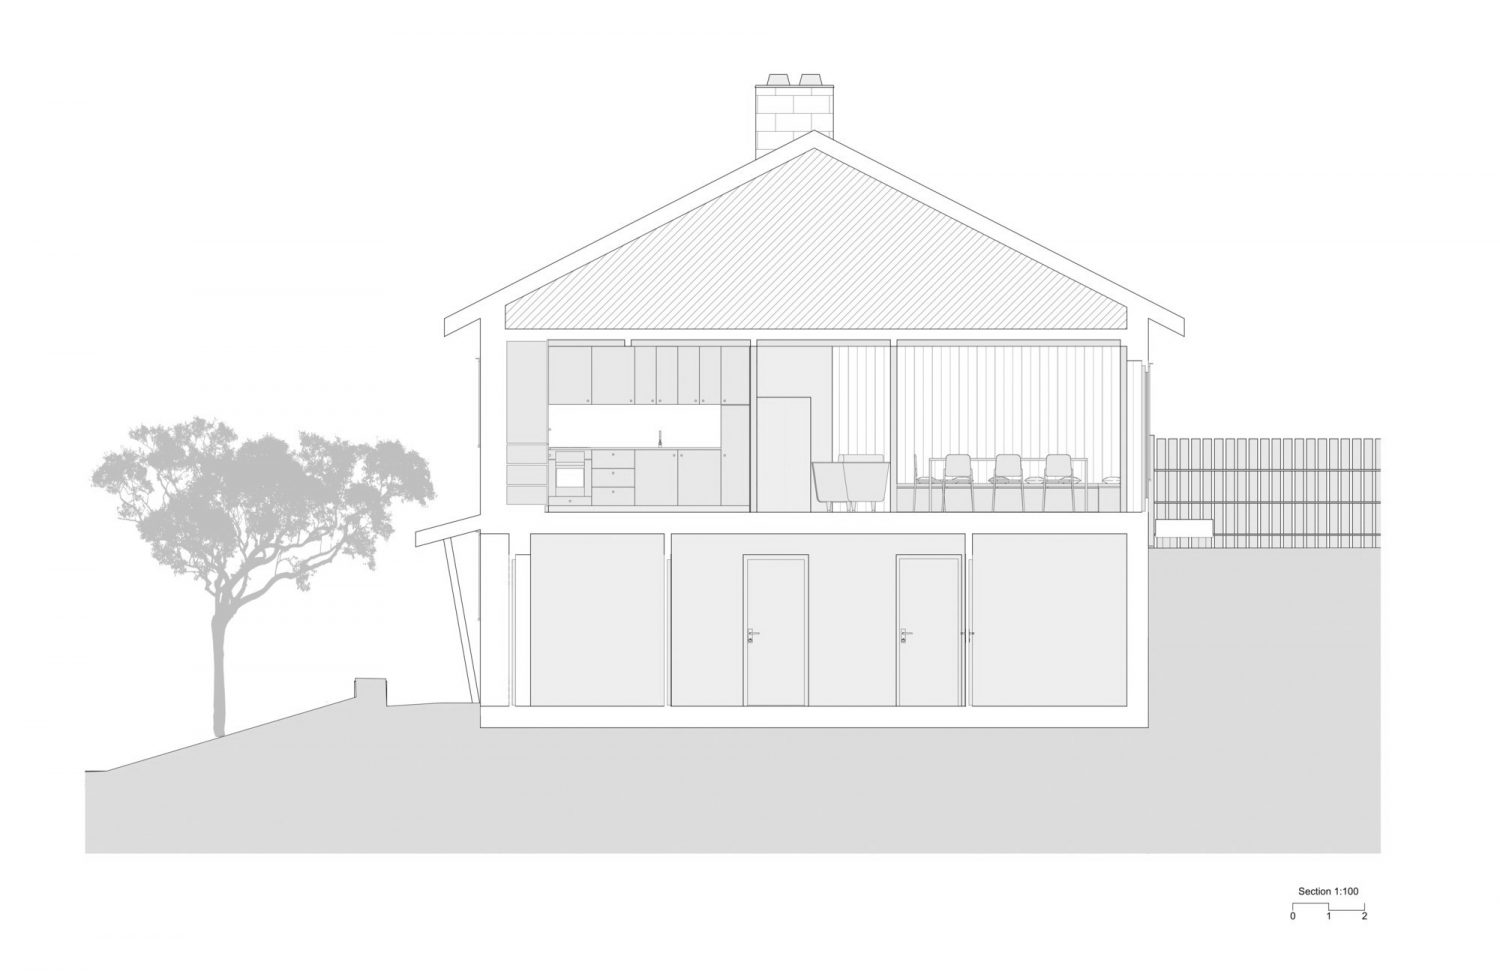 Wood Slat Shotgun House by Austigard Architects